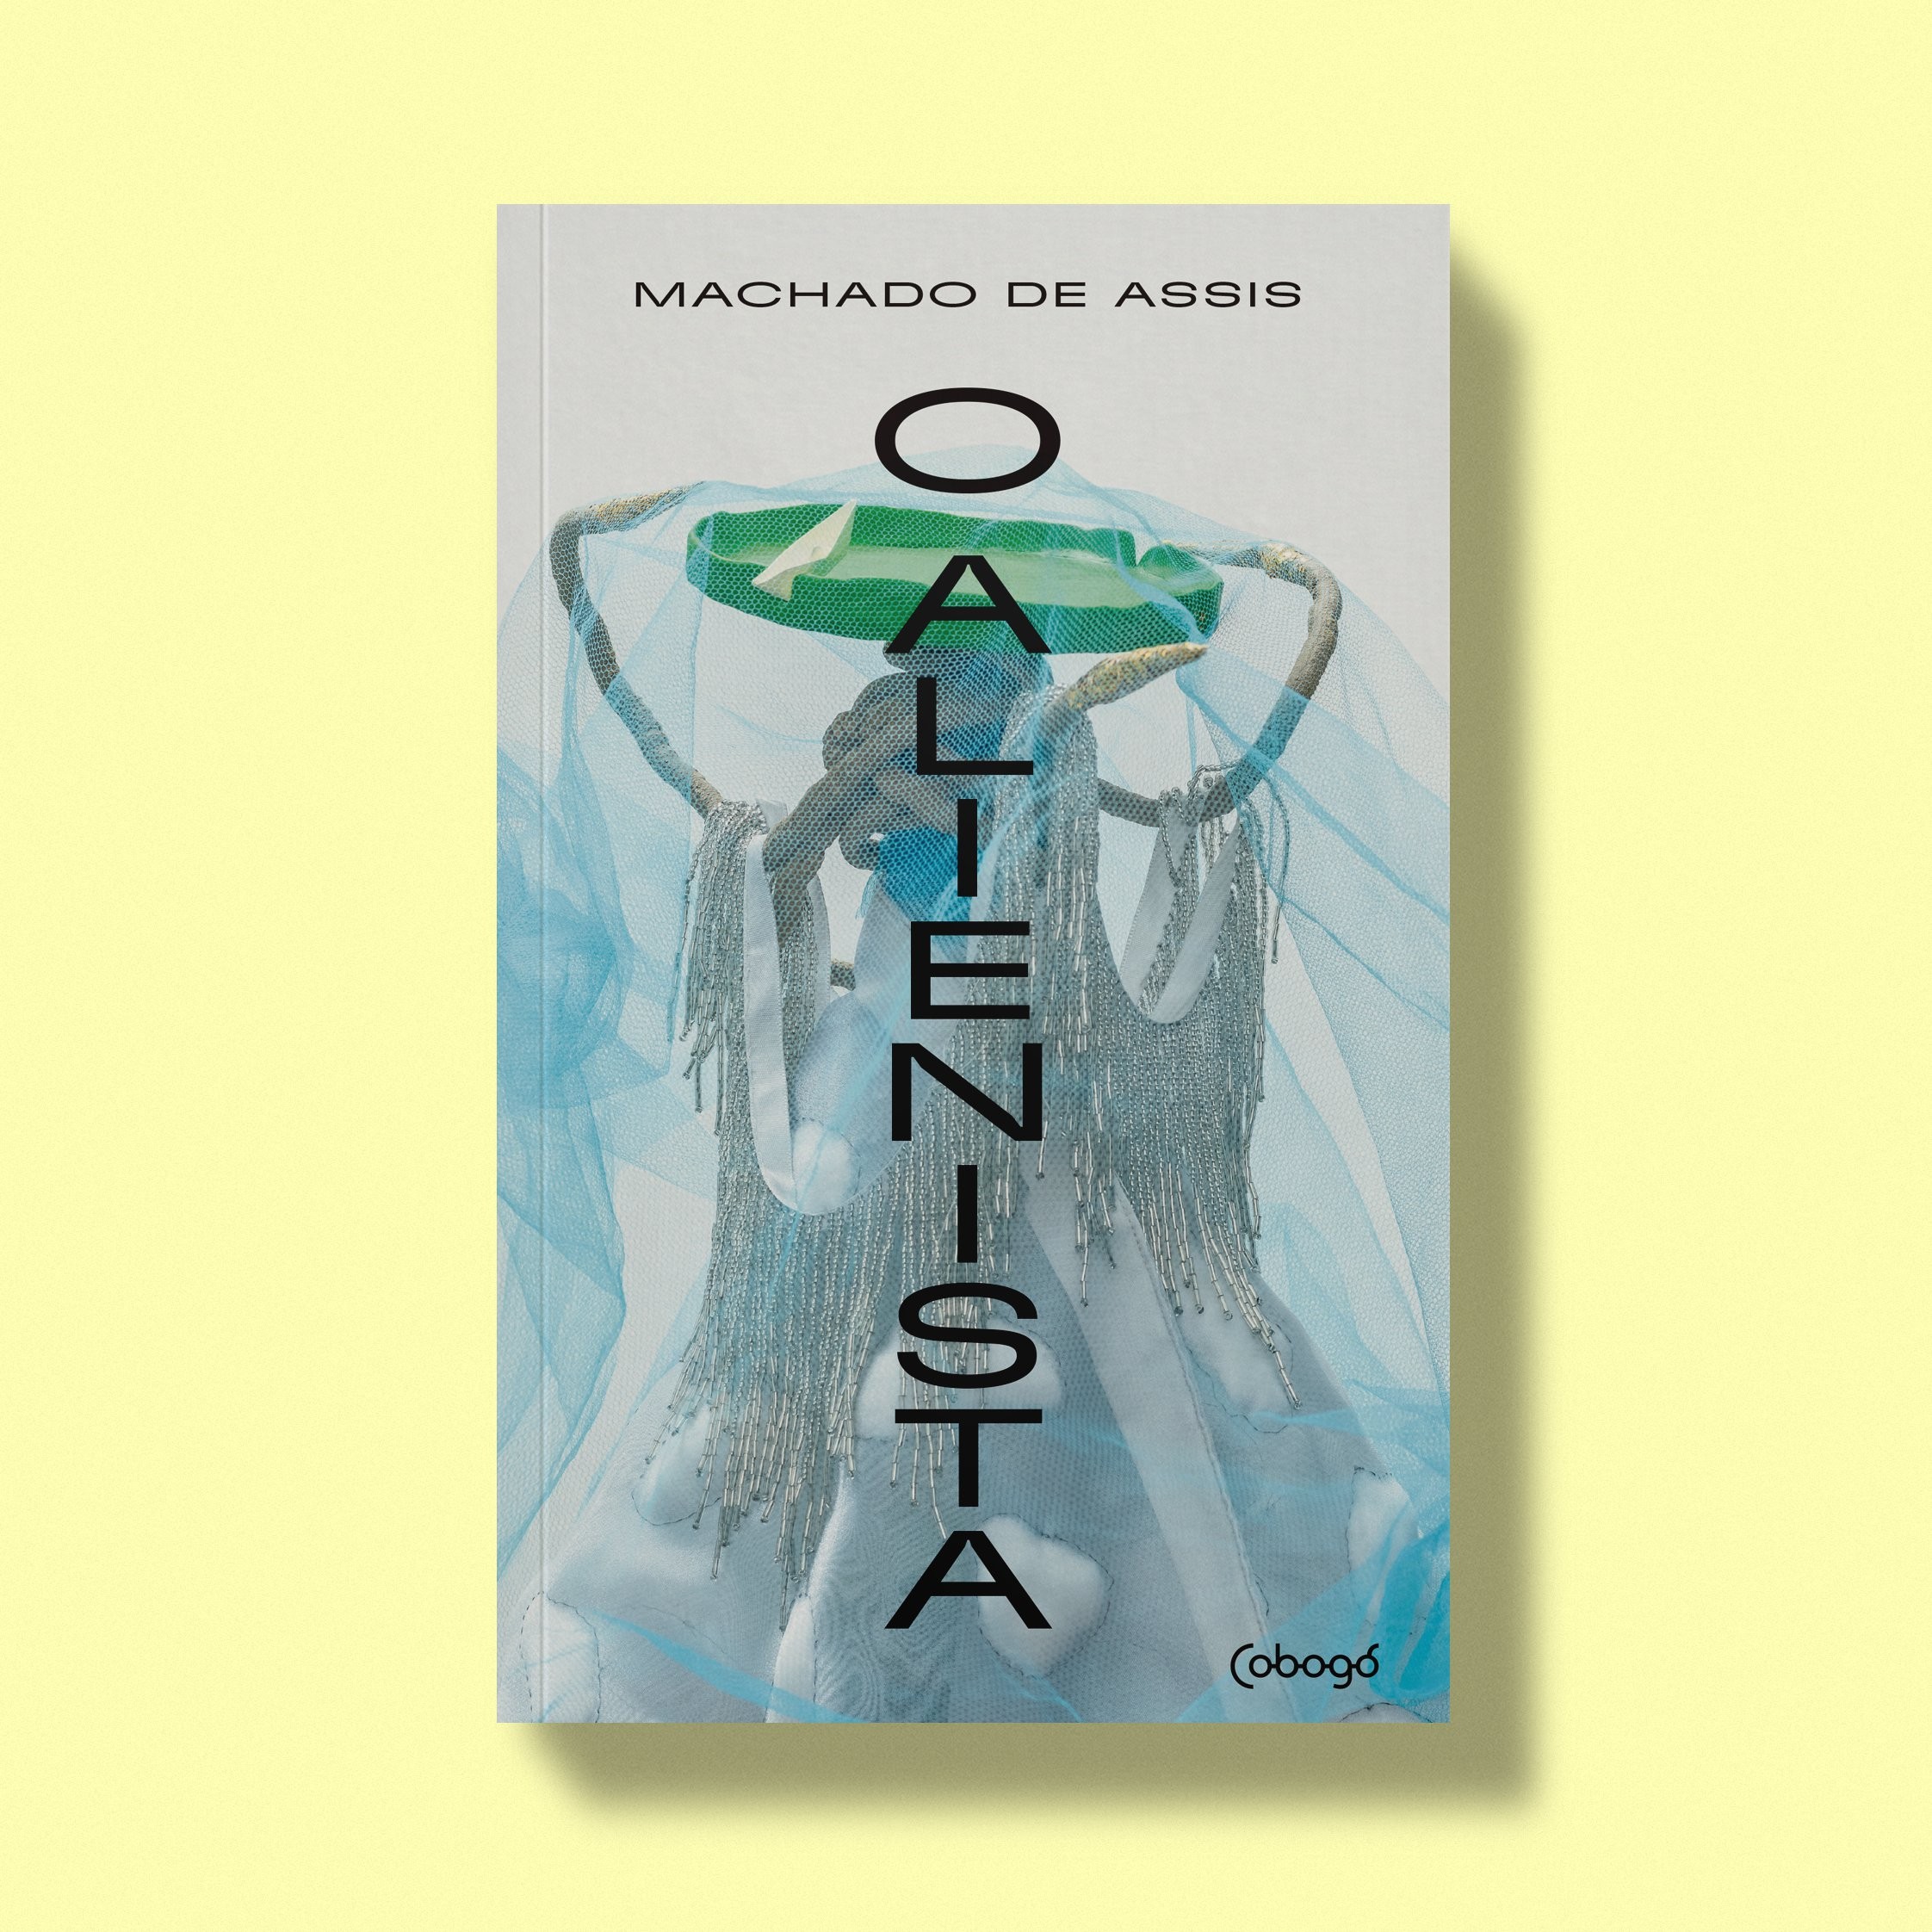 O alienista | The Alienist